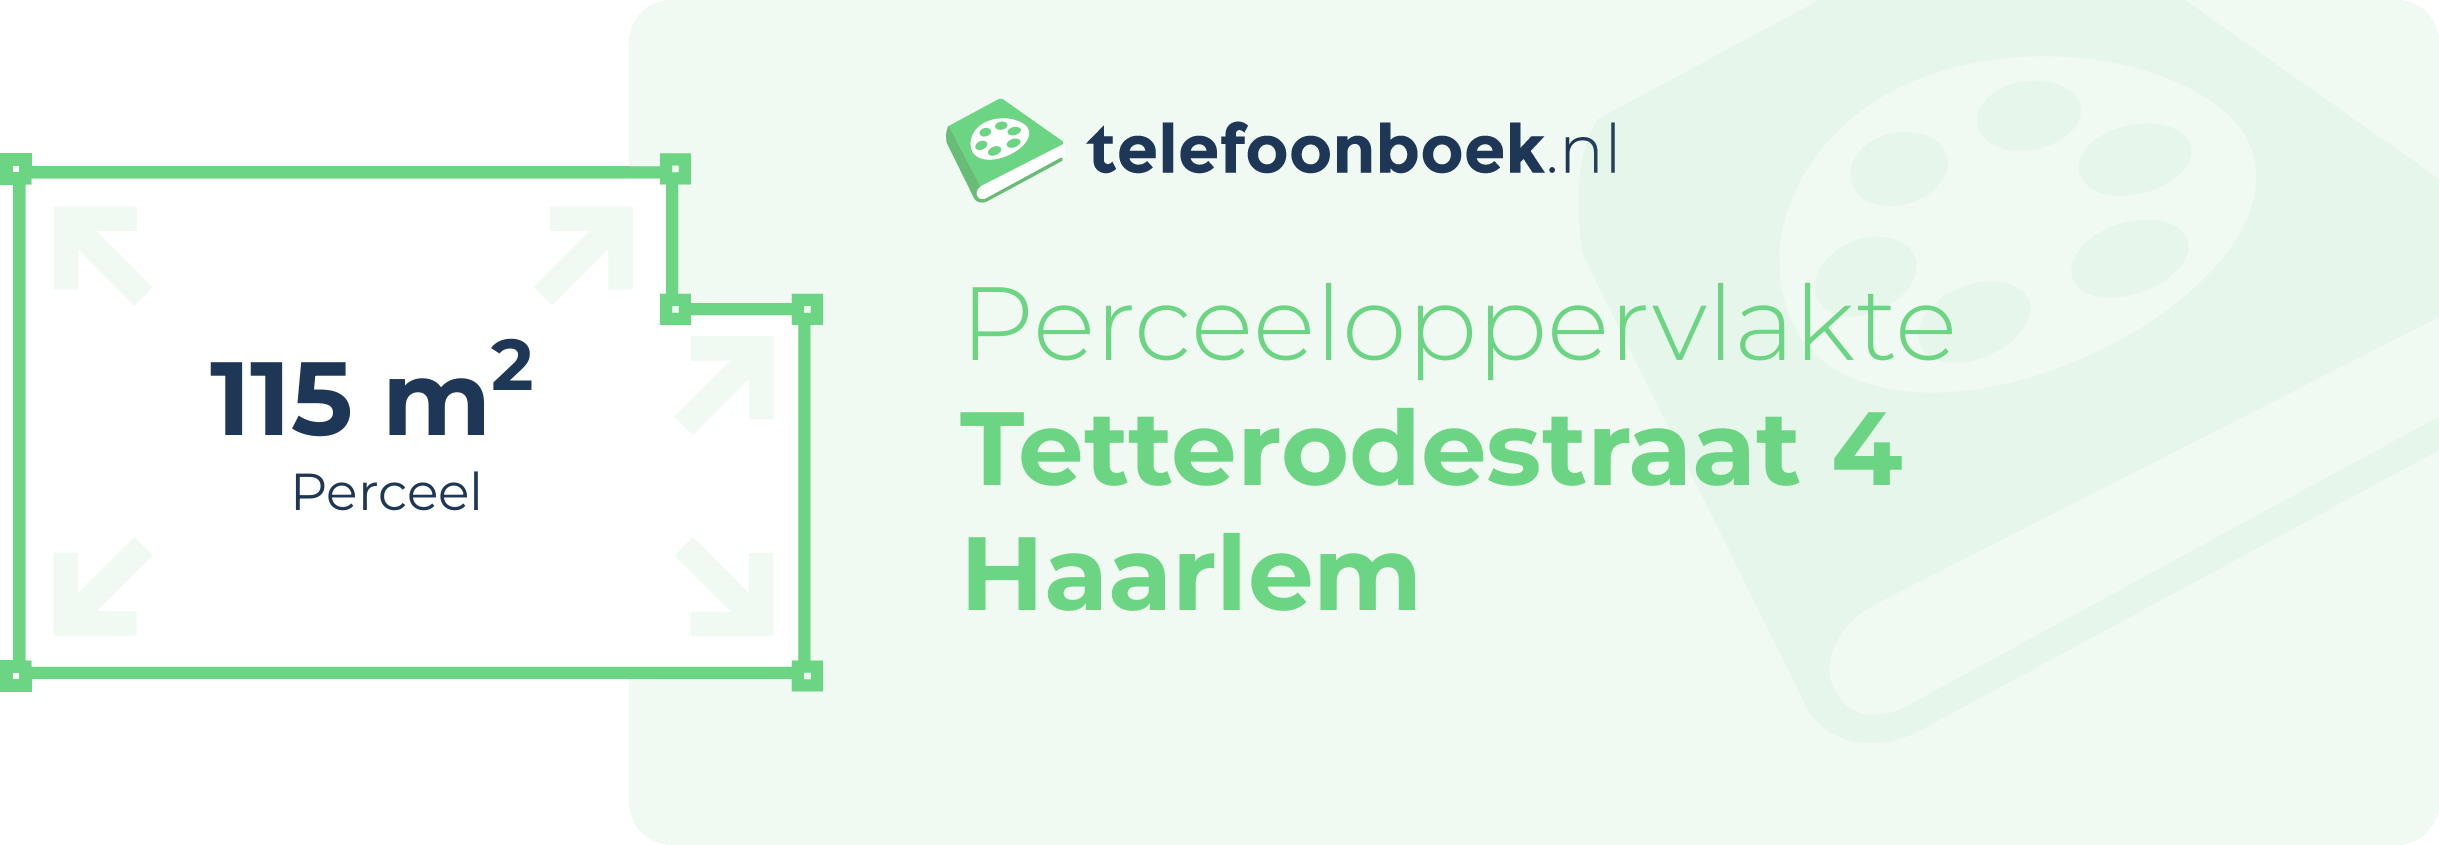 Perceeloppervlakte Tetterodestraat 4 Haarlem